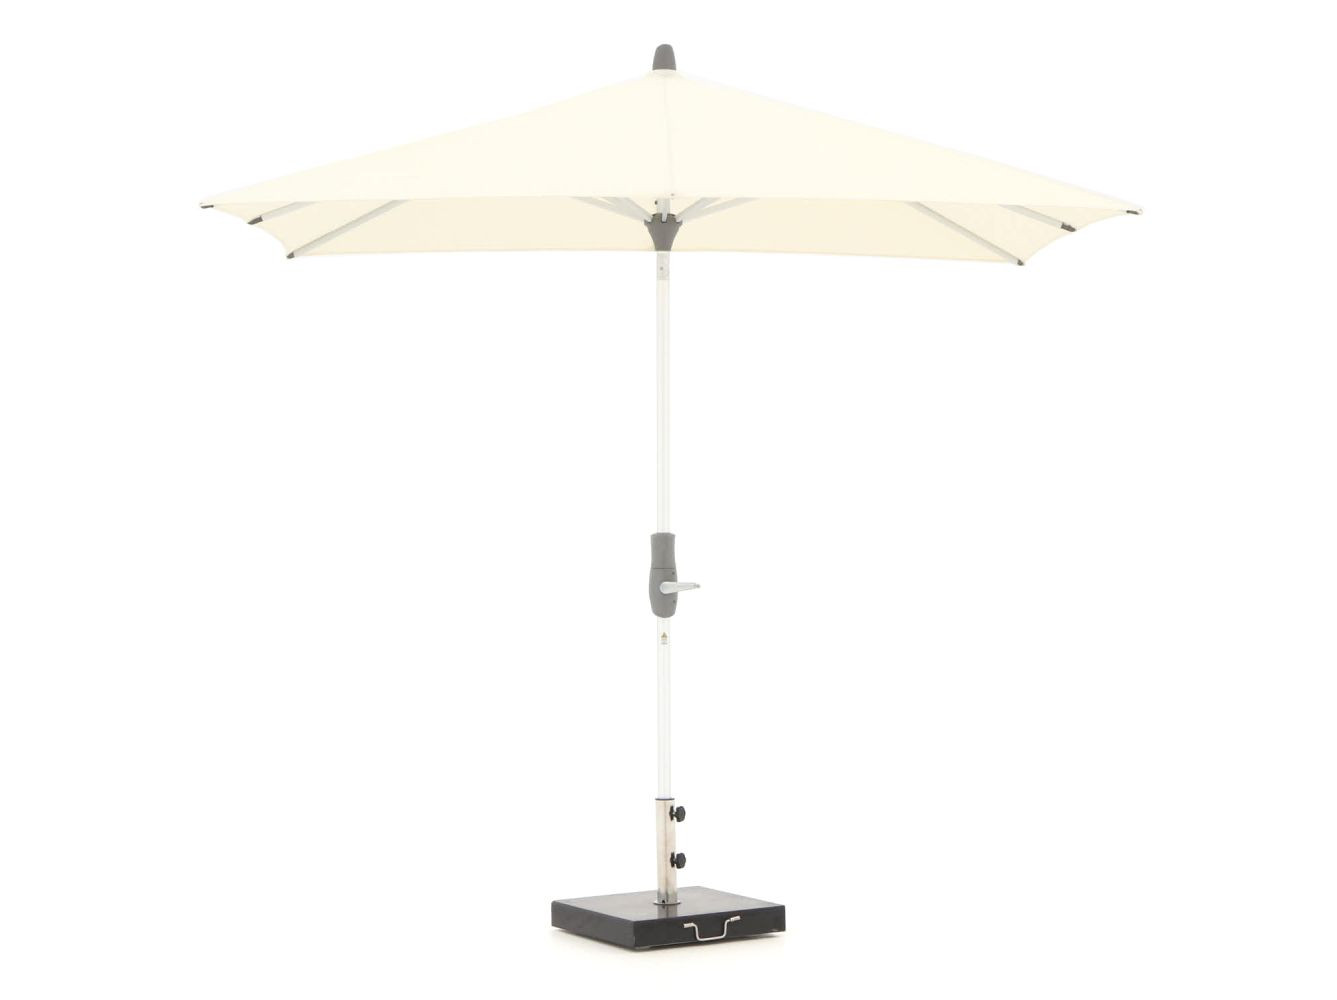 Glatz Alu-Twist parasol 240x240cm - Laagste prijsgarantie!